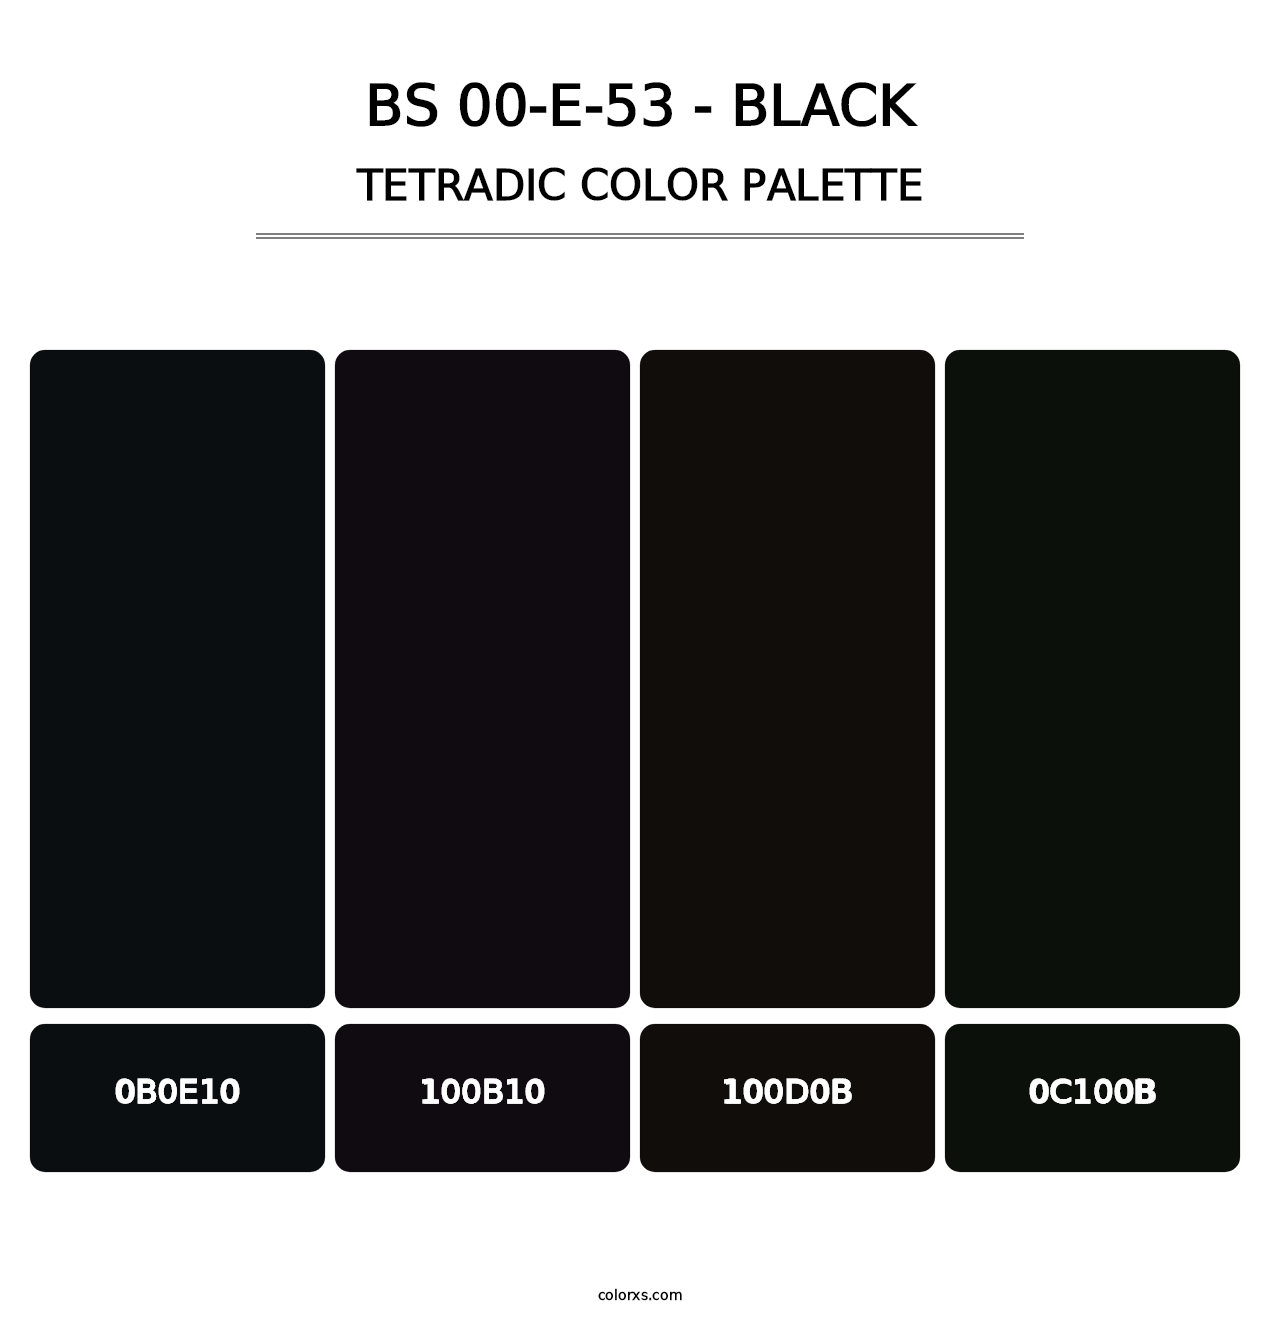 BS 00-E-53 - Black - Tetradic Color Palette